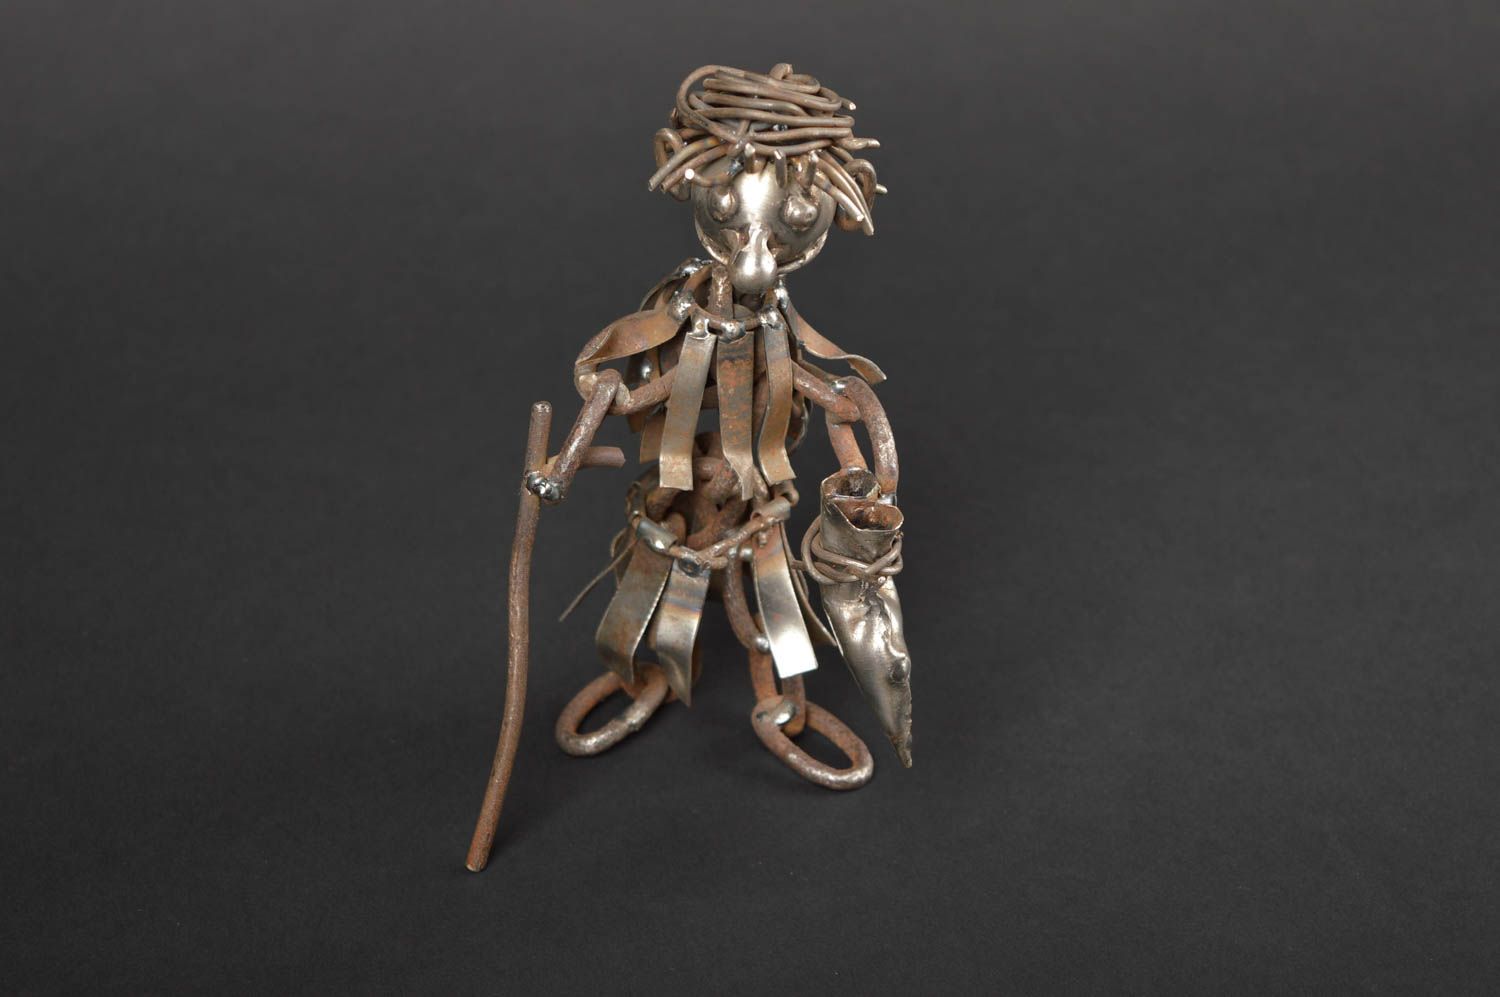 Handmade metal figurine metal art figurines of people for decorative use only photo 1